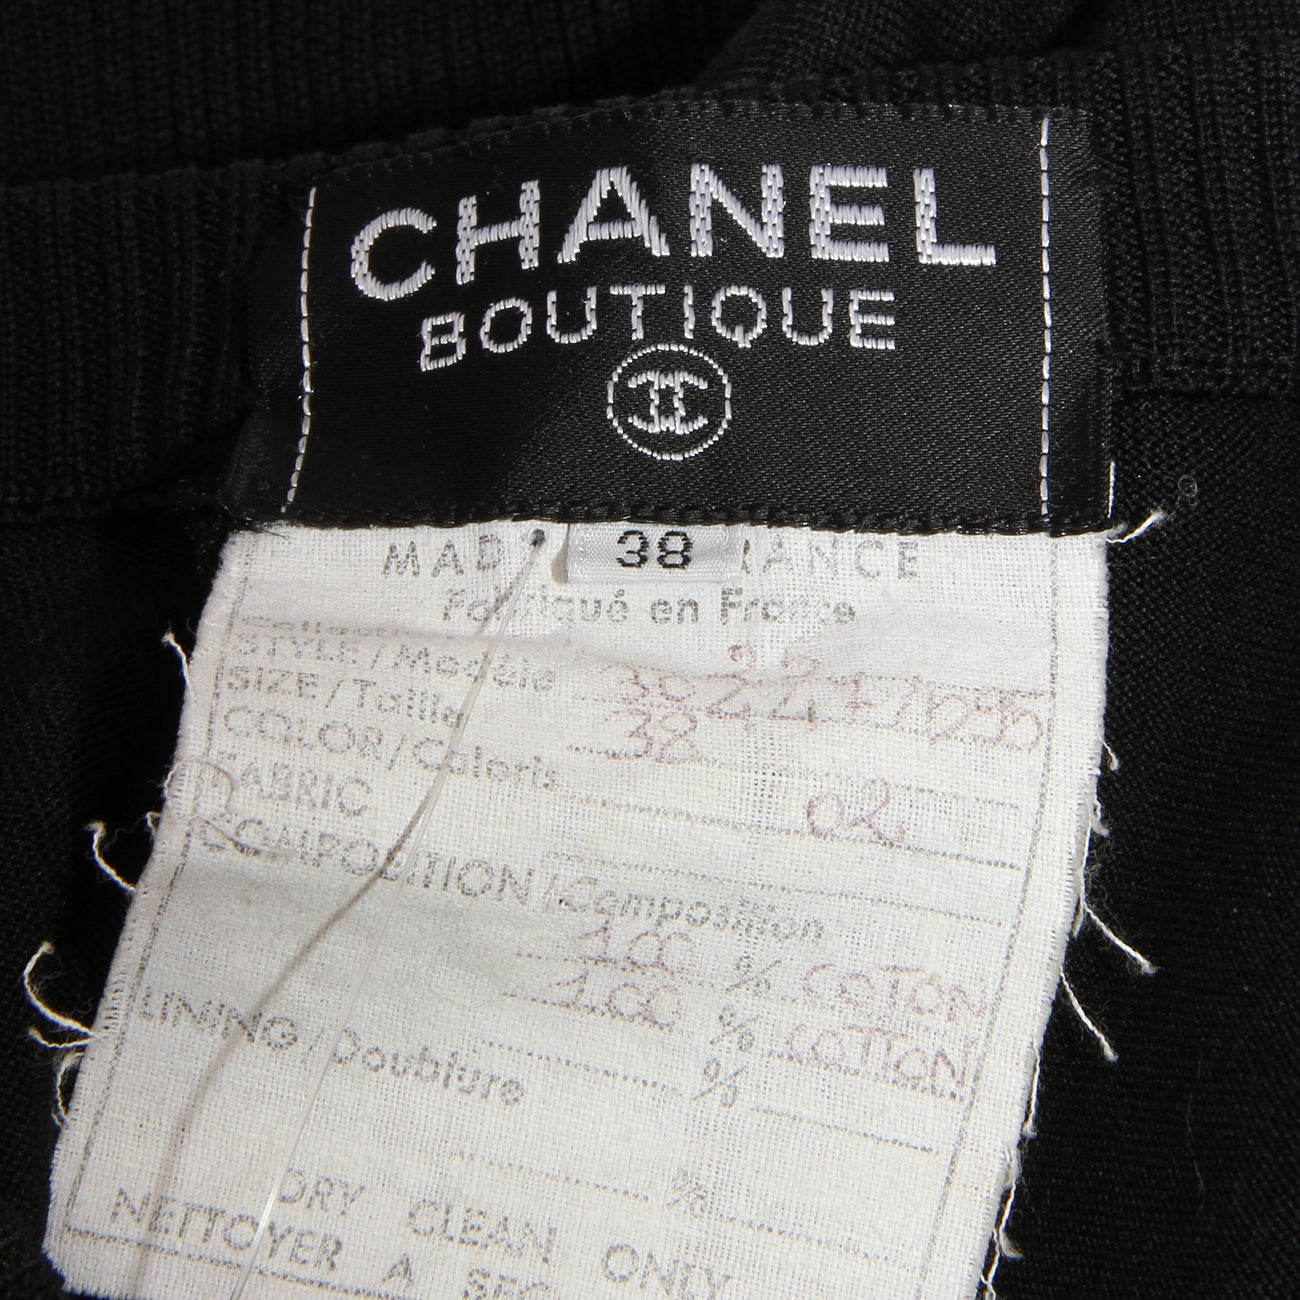 Chanel Black Short Sleeve Knit Top